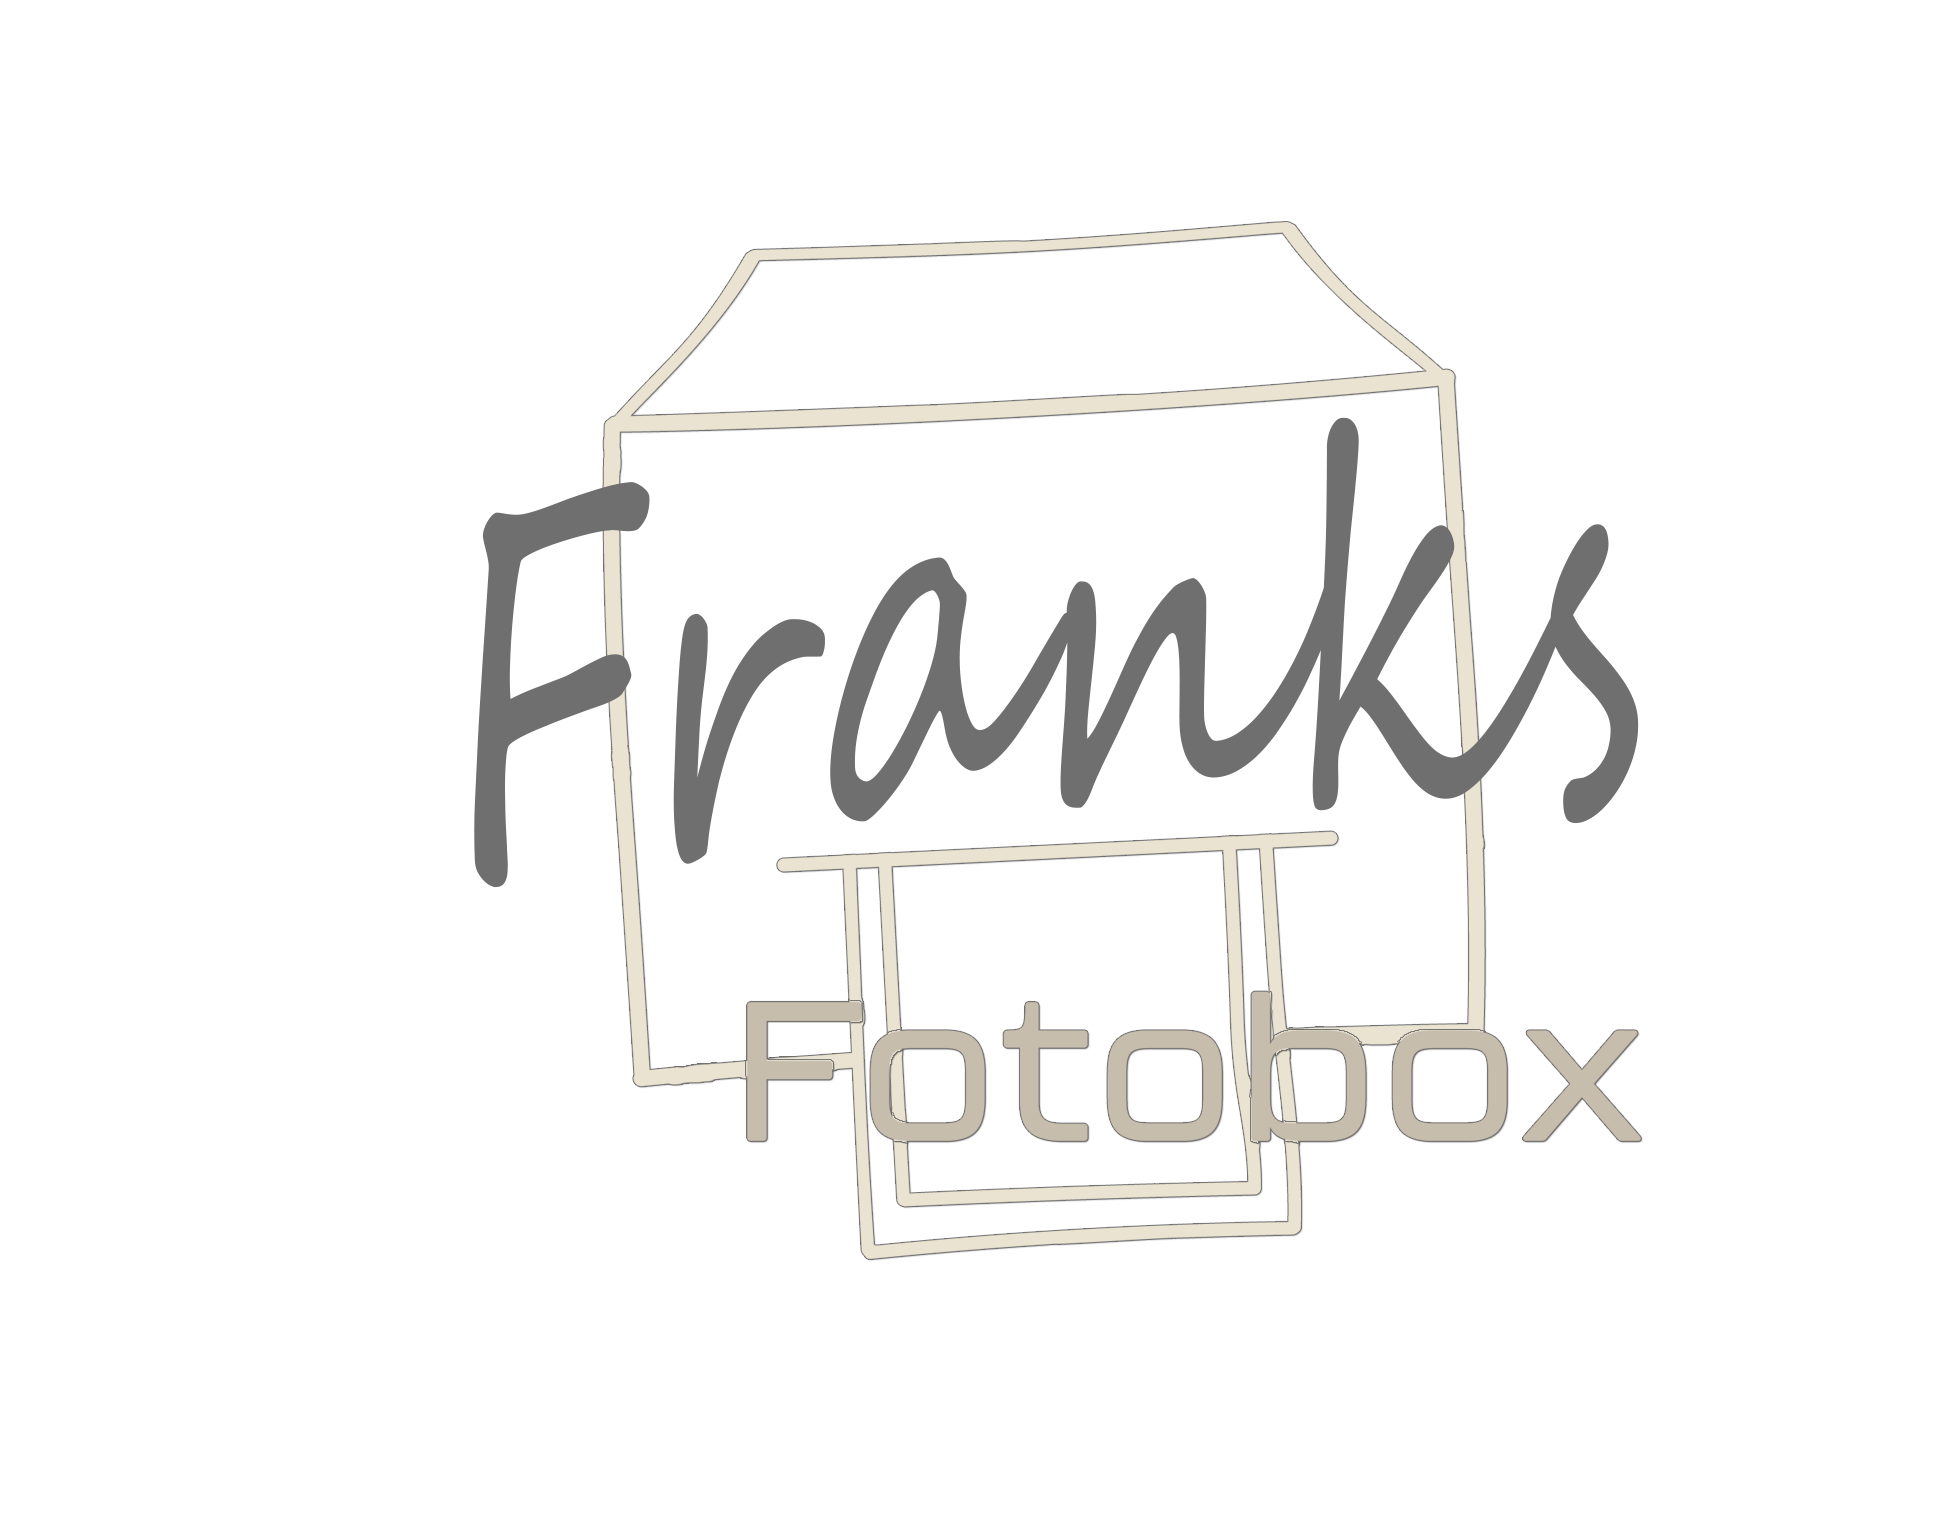 Franks Fotobox